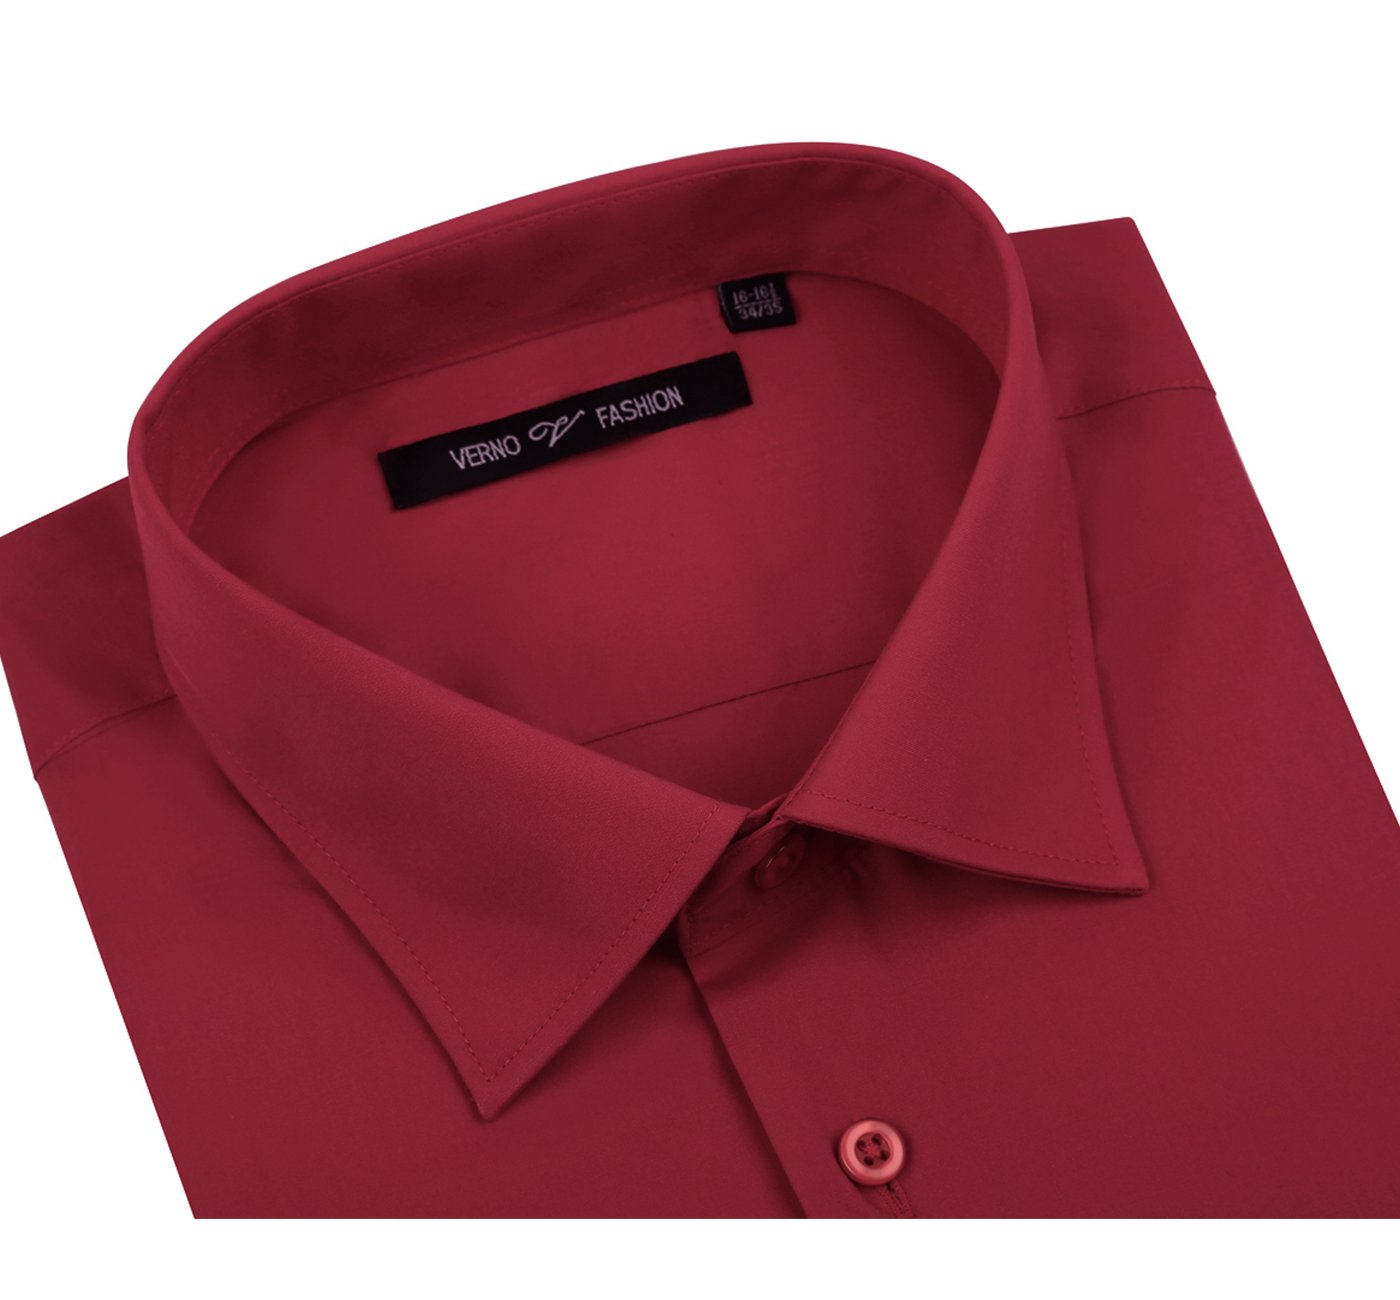 TC626 Men's Classic Fit Long Sleeve Red Spread Collar Dress Shirt